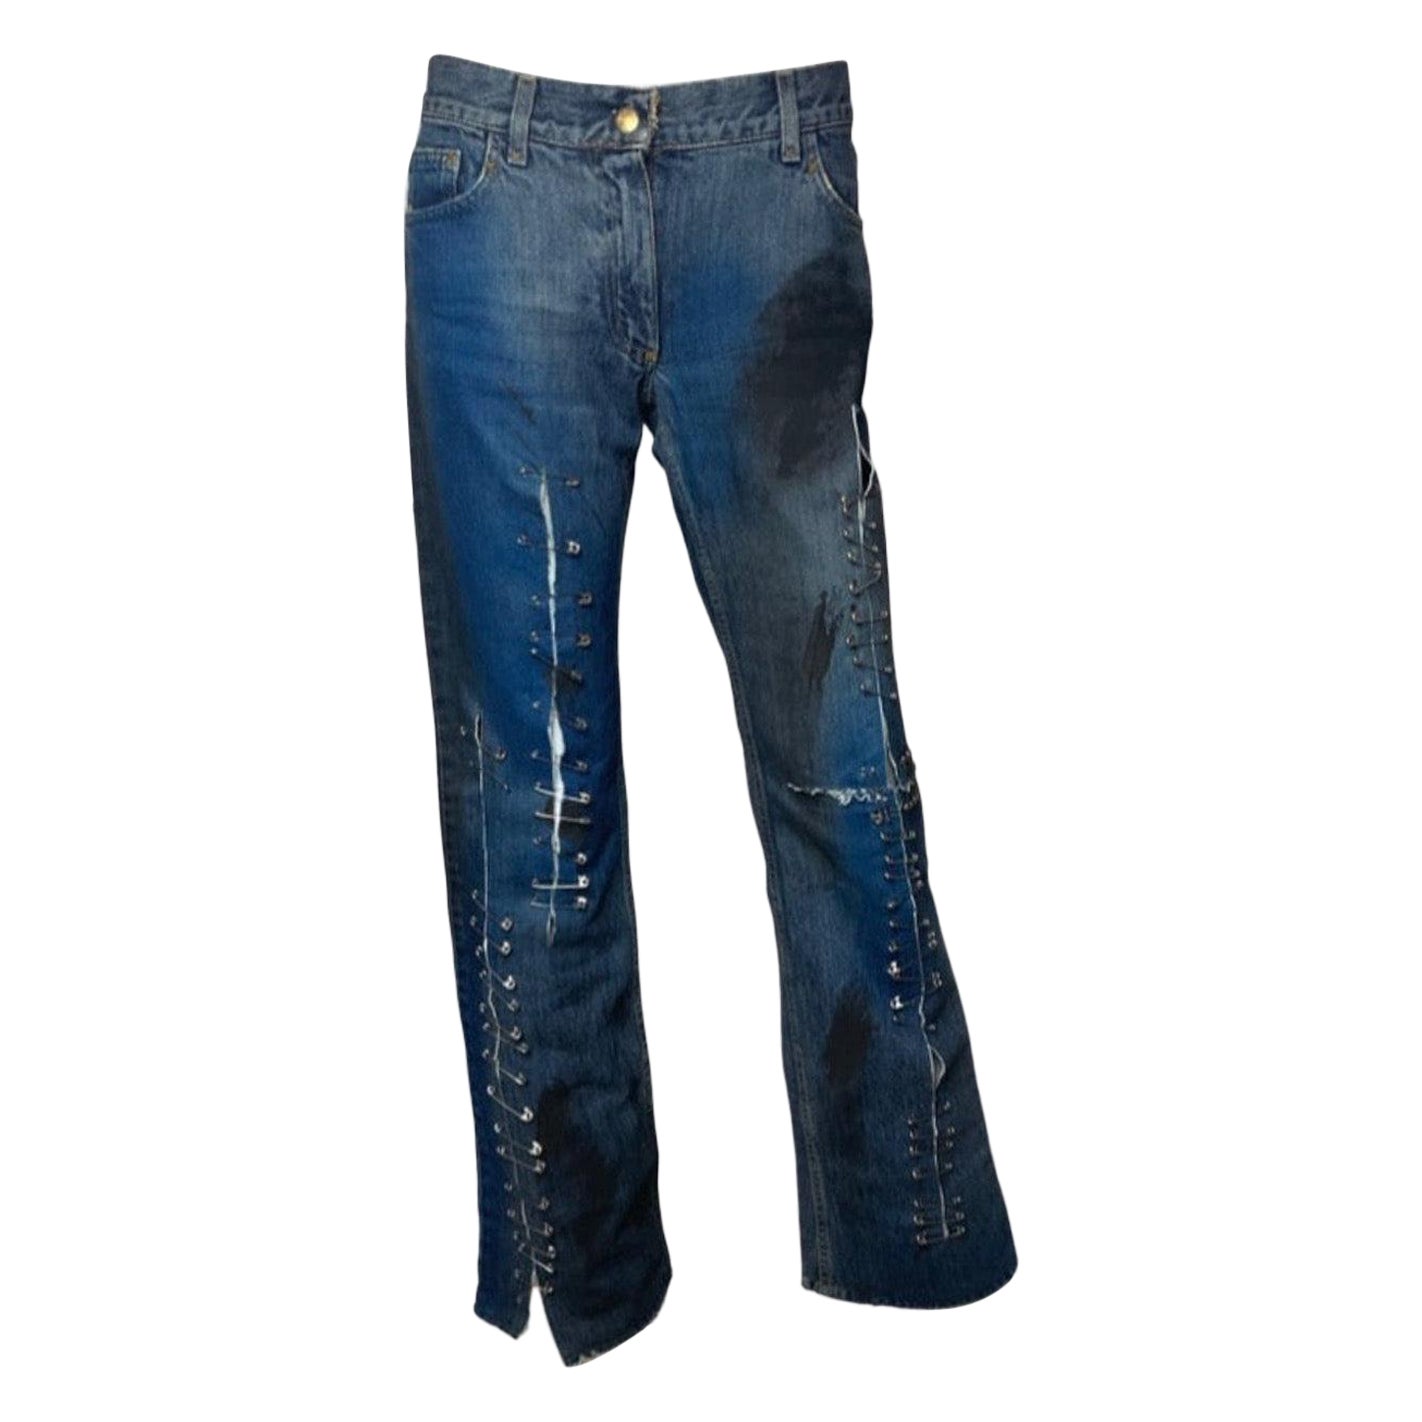 Dolce & Gabbana SS 2001 Graffiti Punk Jeans with Safety Pins